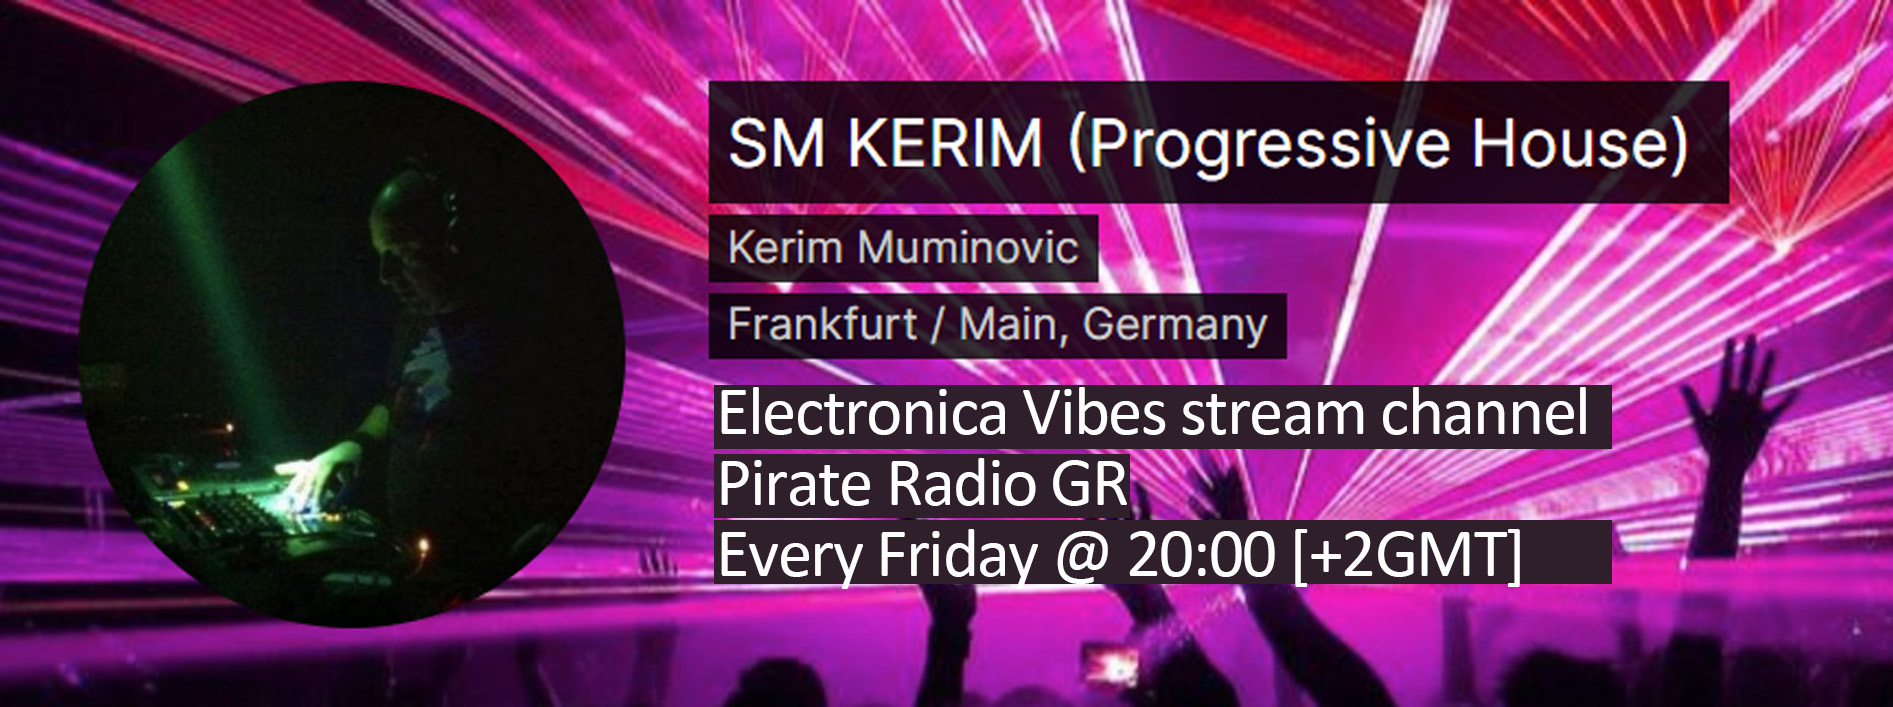 SM Kerim - Host on Electronica Vibes Stream Chanel - Pirate Radio GR